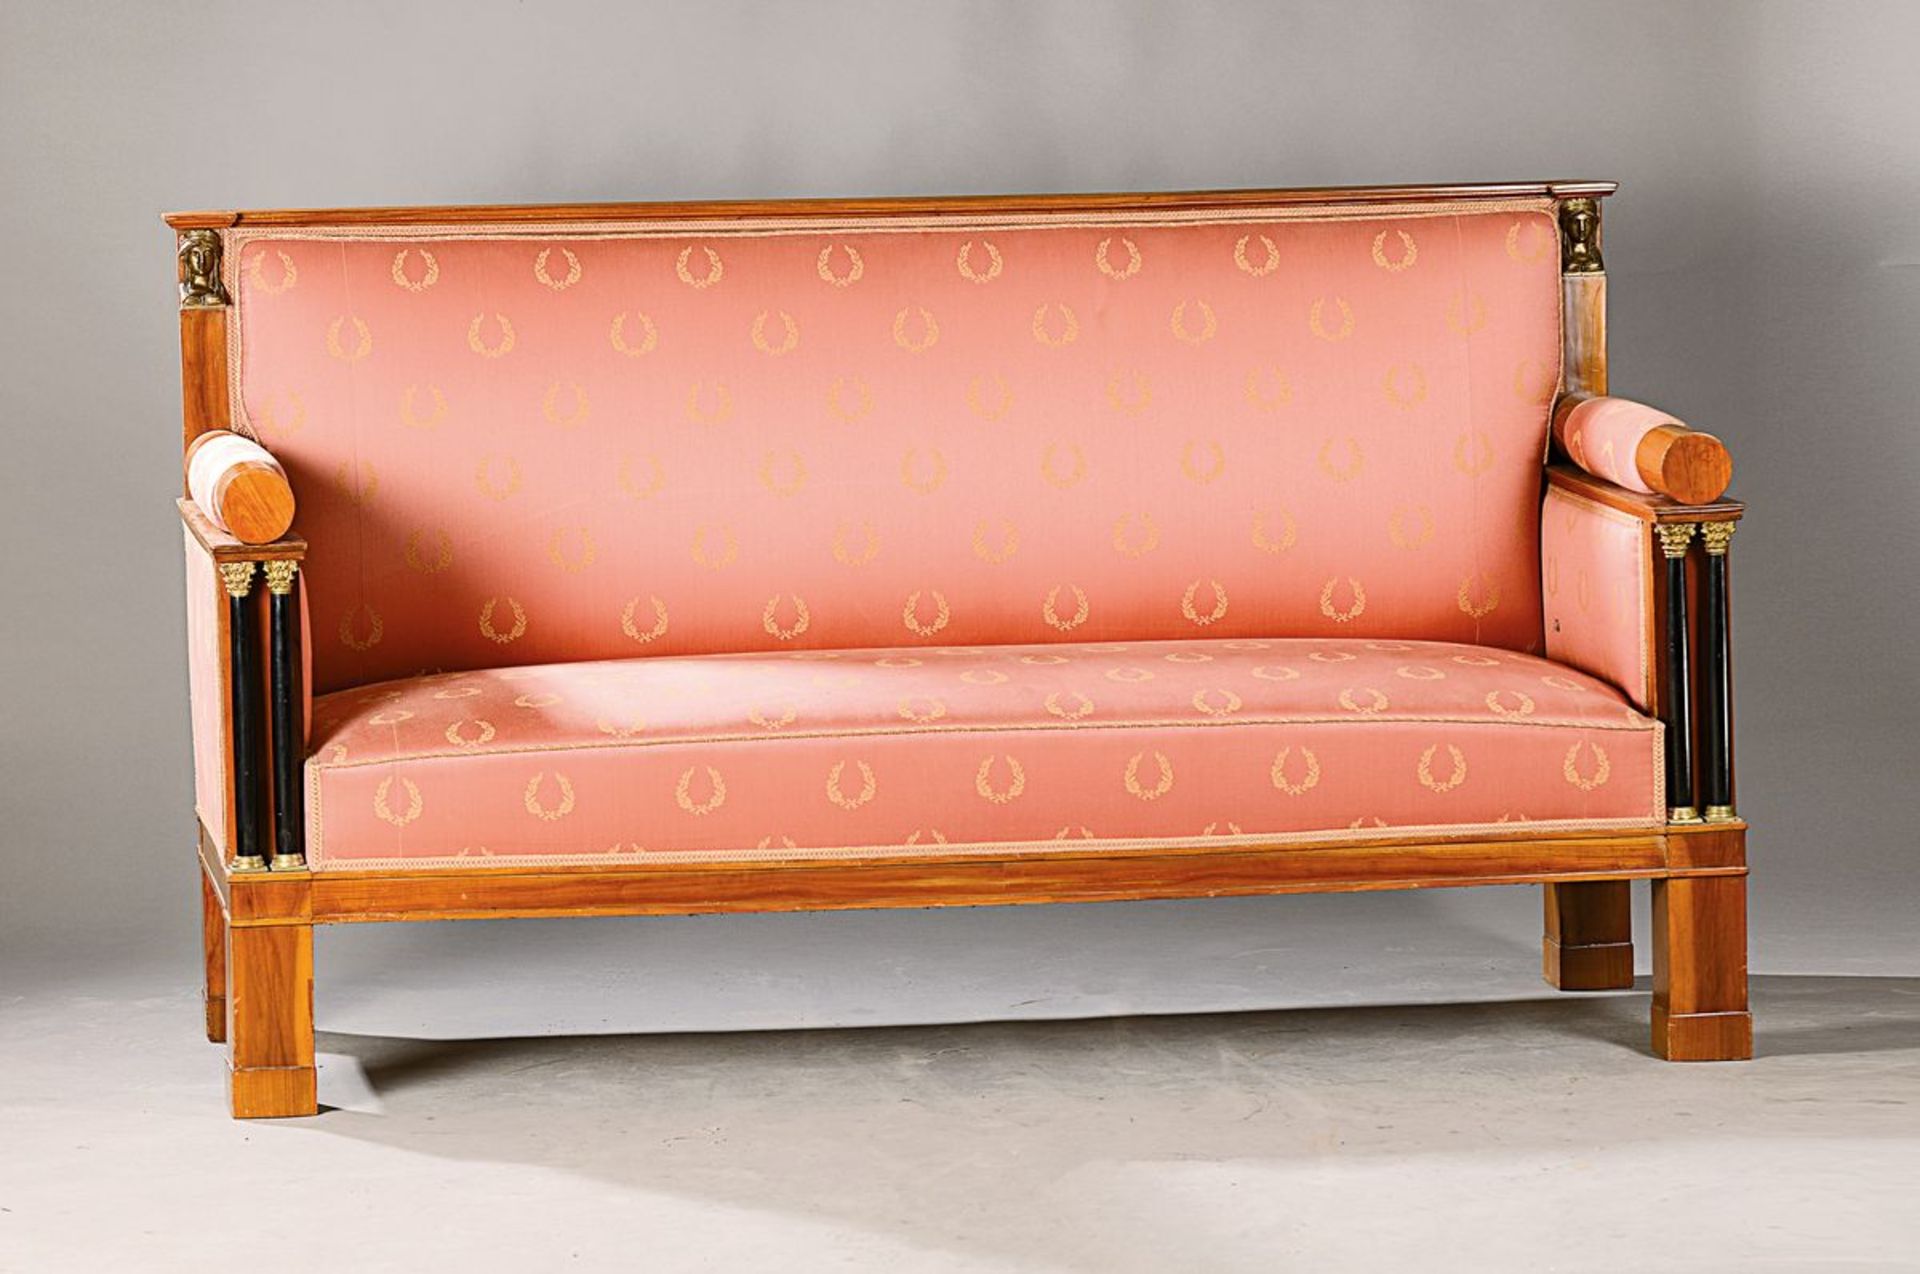 Sofa, Empirestil, 2. Hälfte 19. Jh., Kirschbaumfurnier,